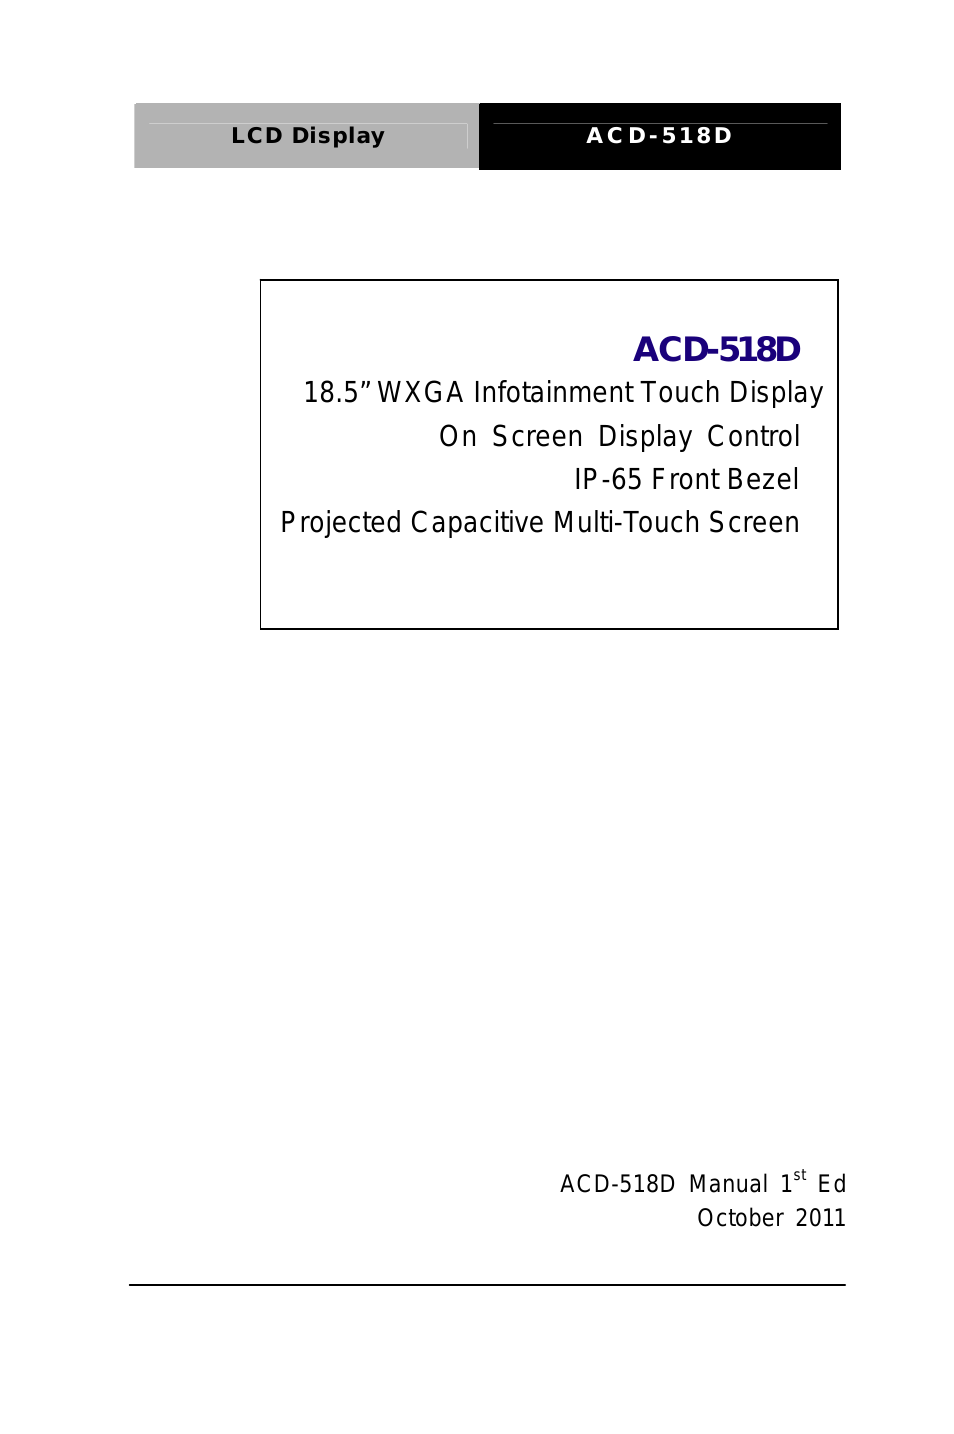 ACD-518D